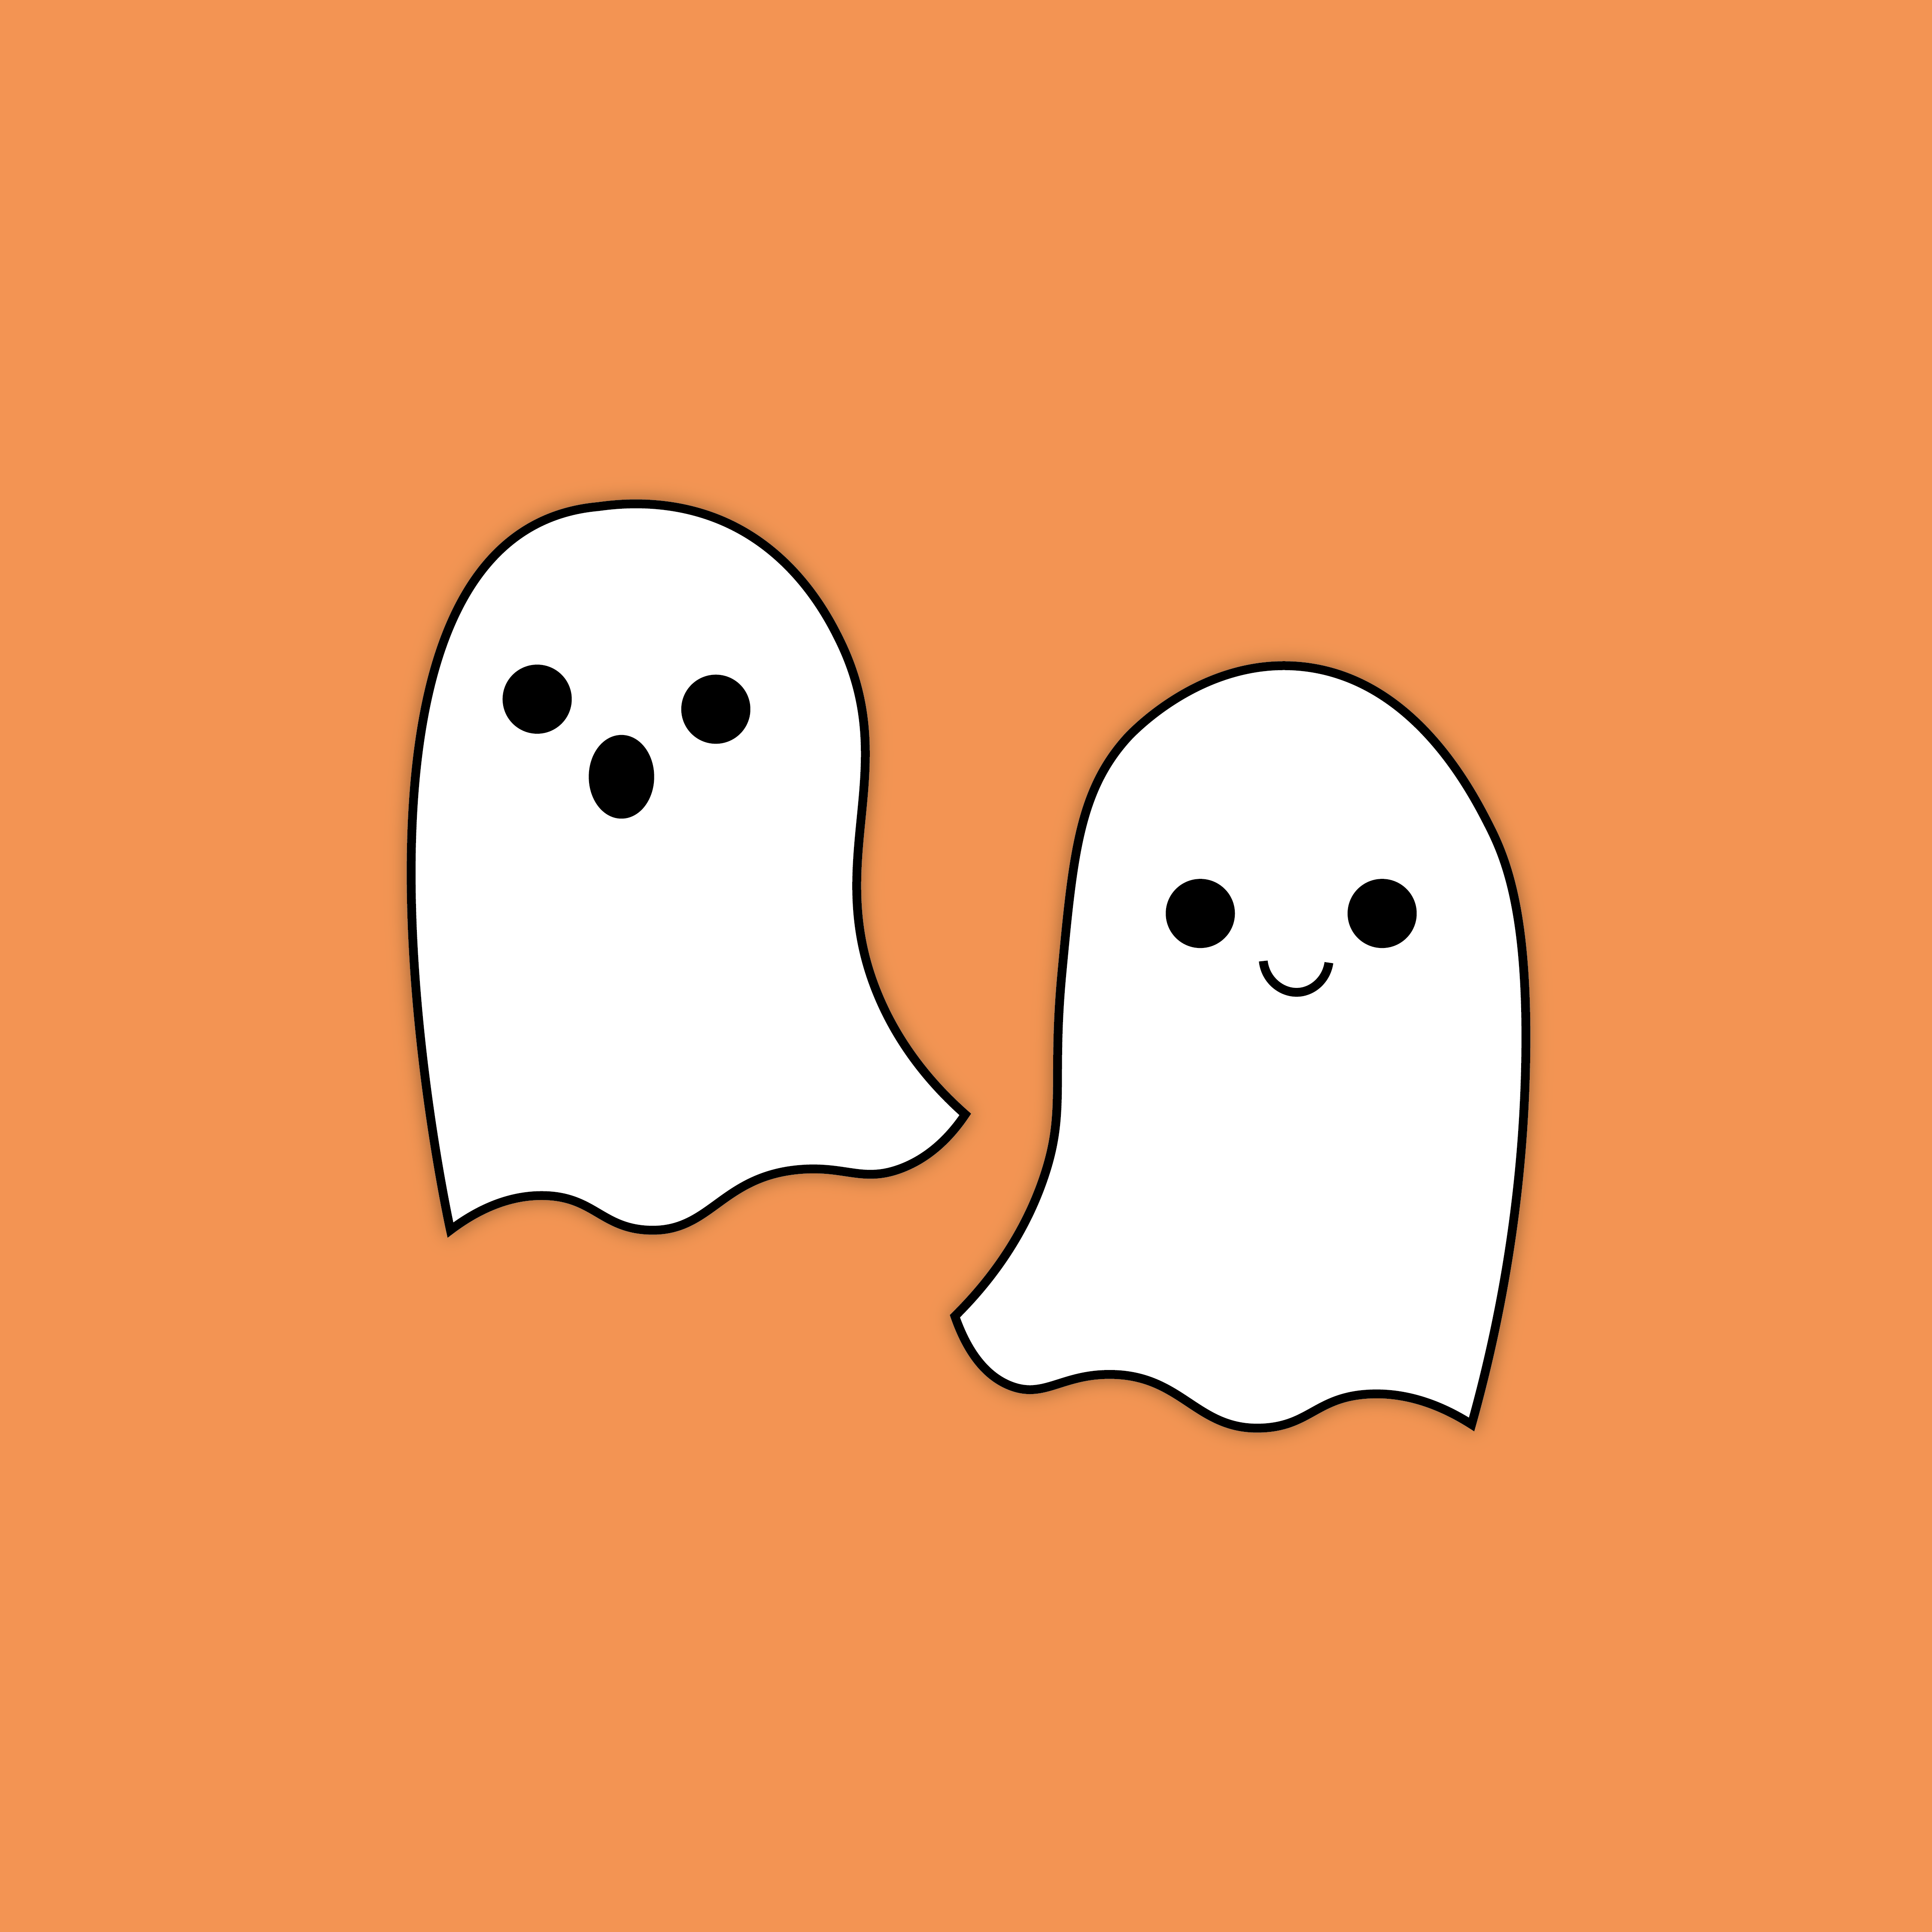 Ghost friends!. Halloween wallpaper iphone background, Halloween wallpaper iphone, Halloween wallpaper background